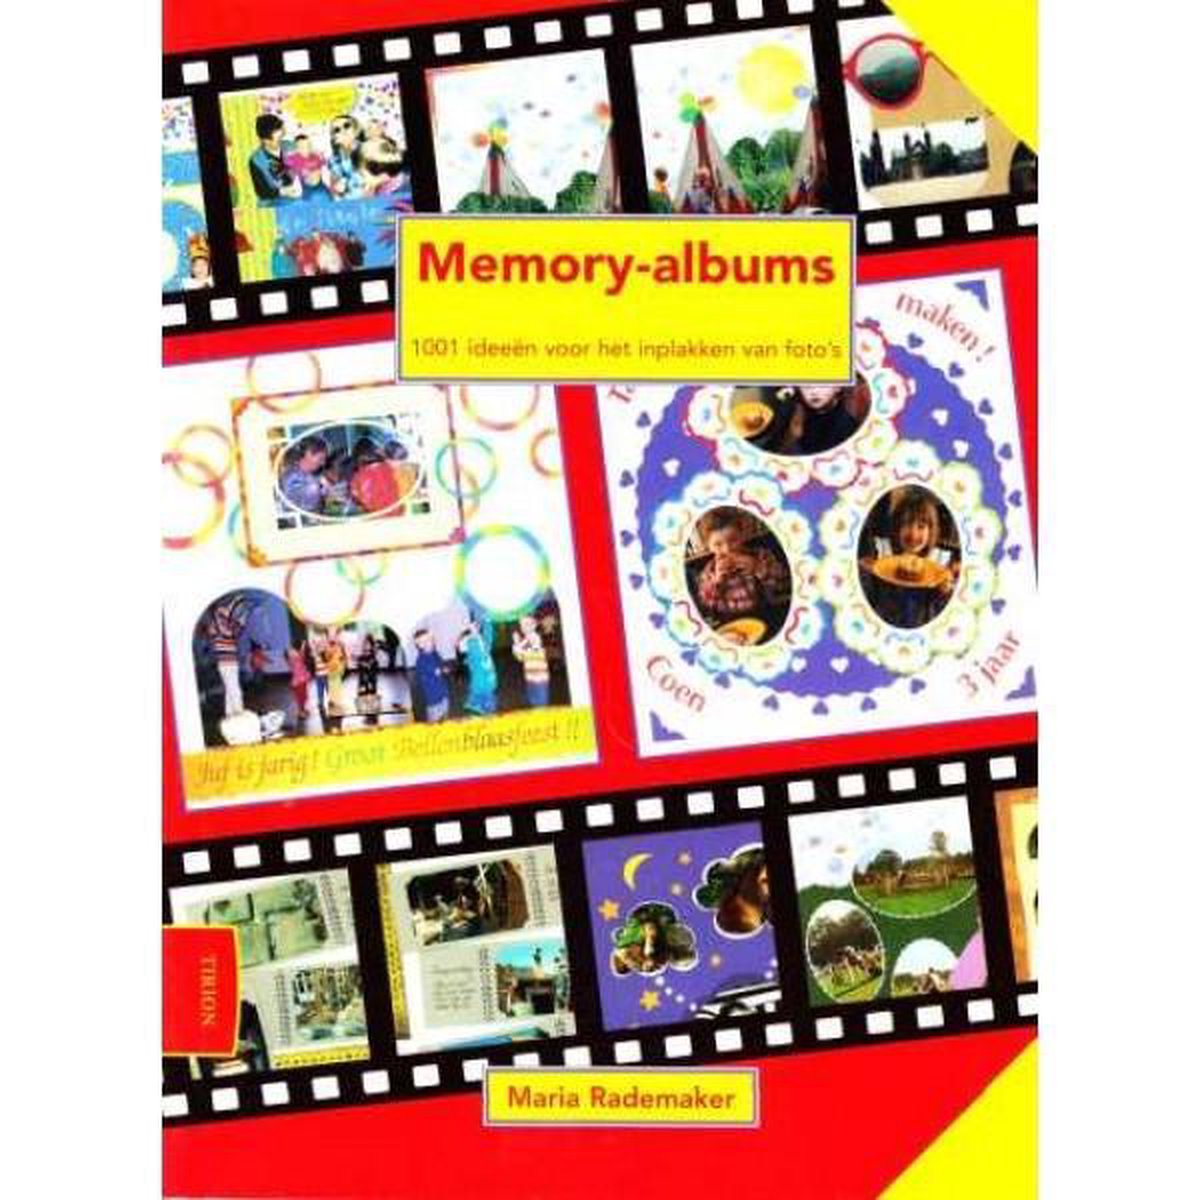 Memory-albums